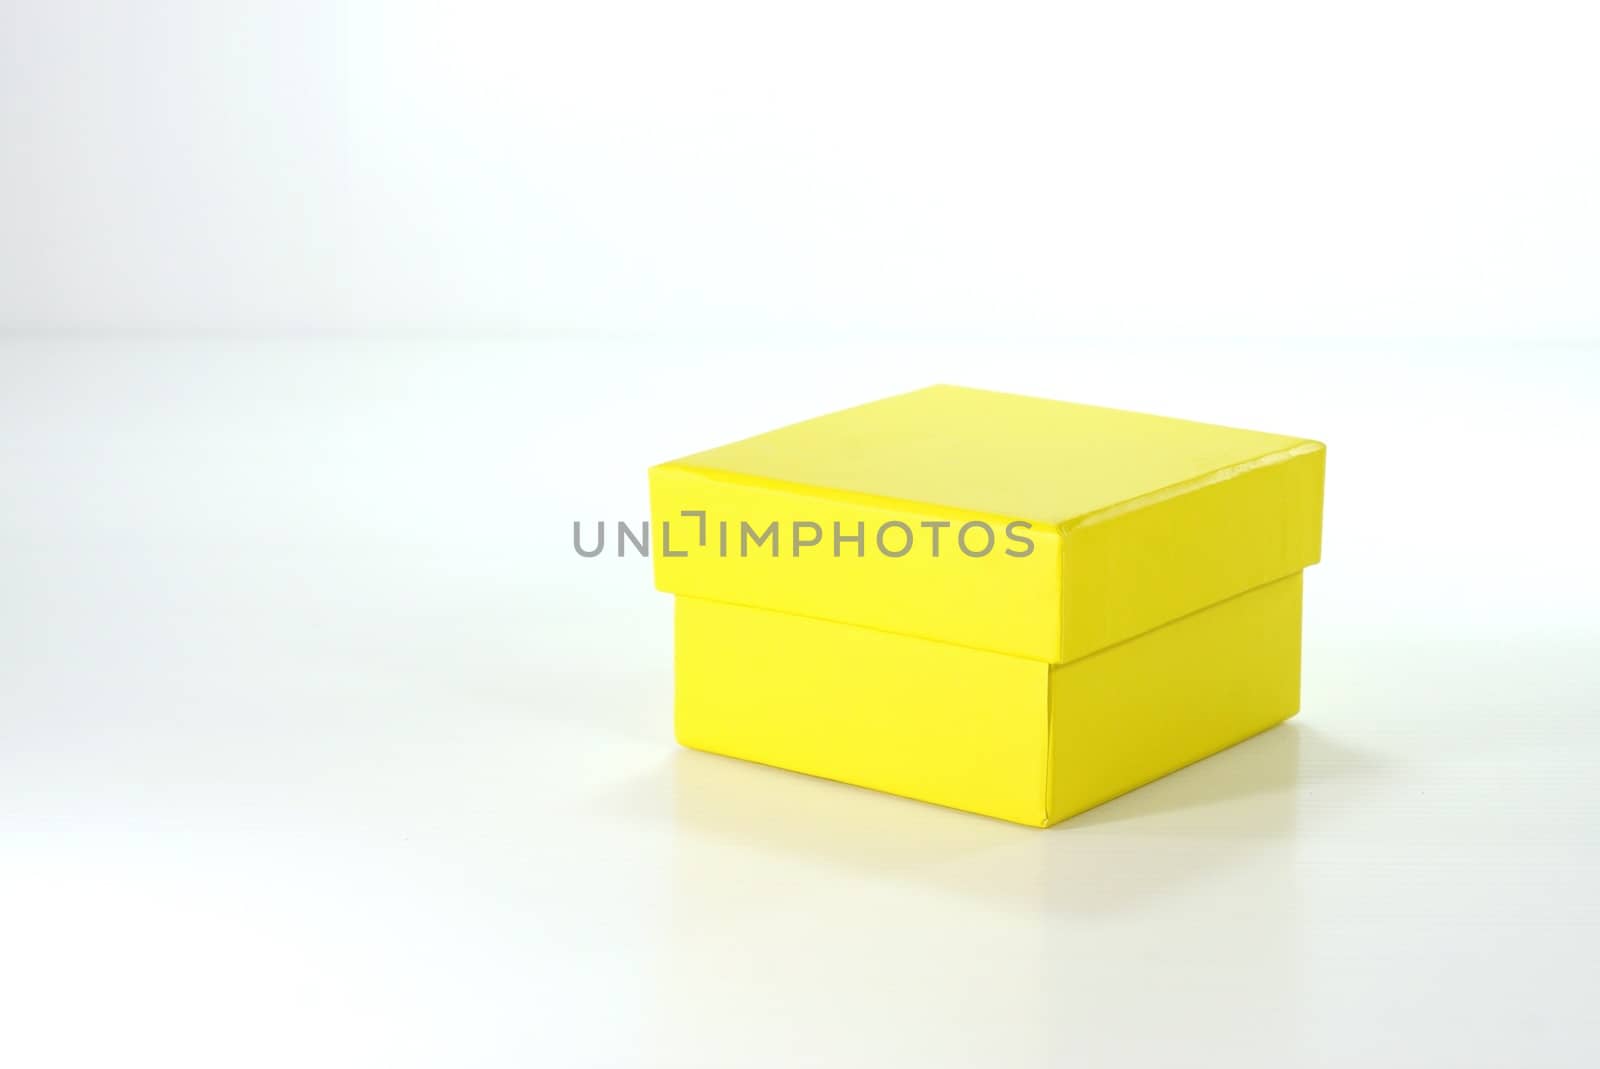 yellow paper box on white scene,shallow focus